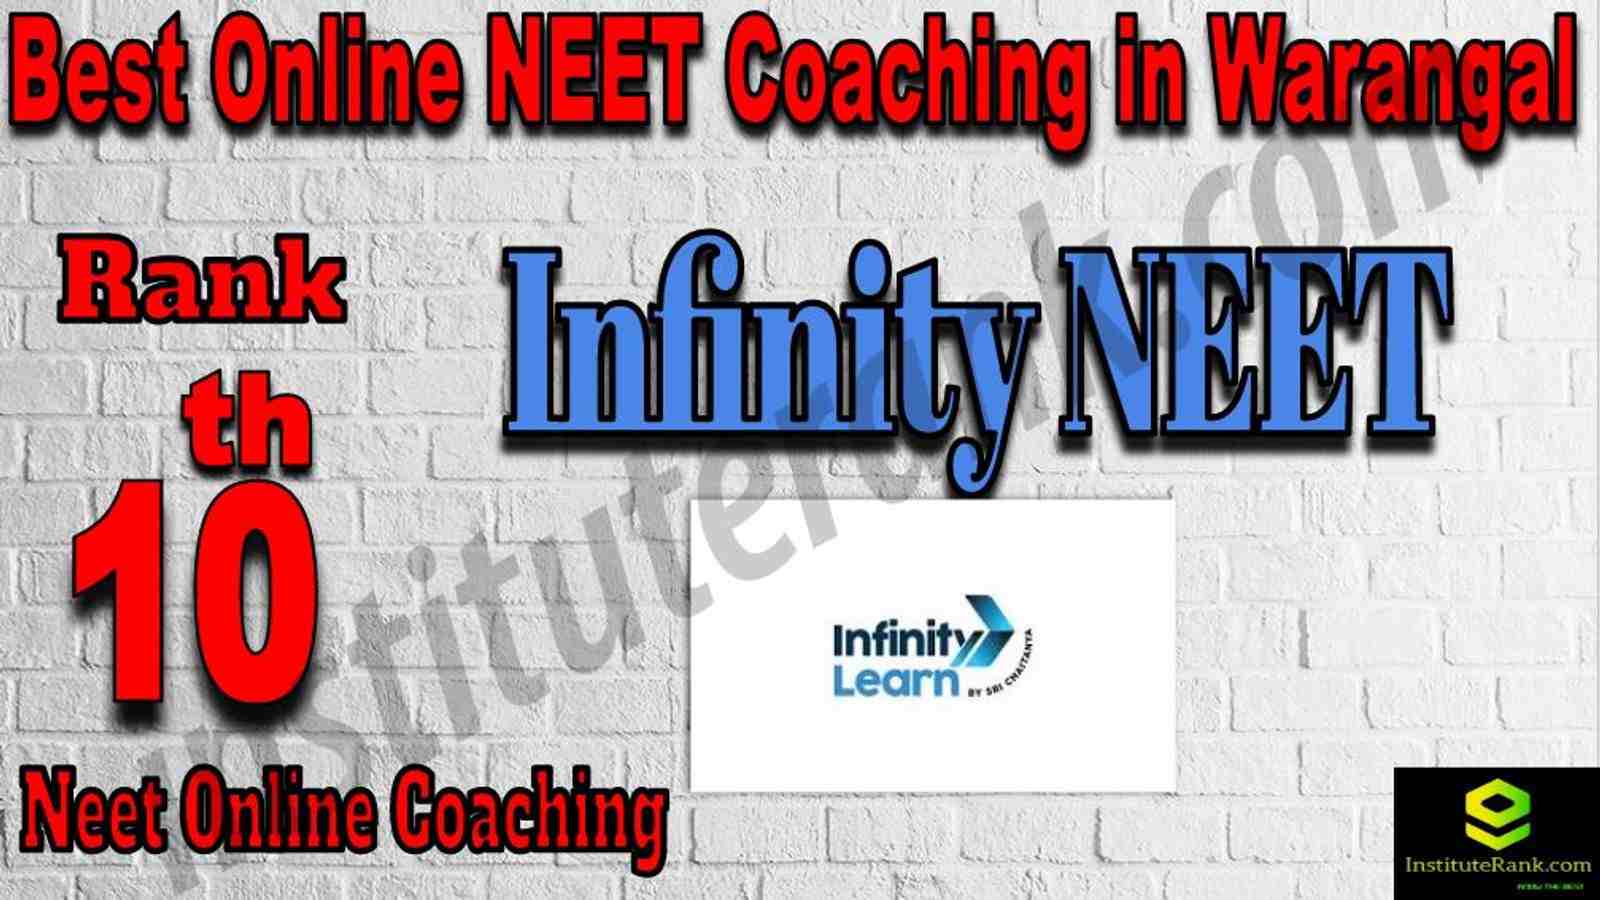 10th Best Online Neet Coaching in Warangal